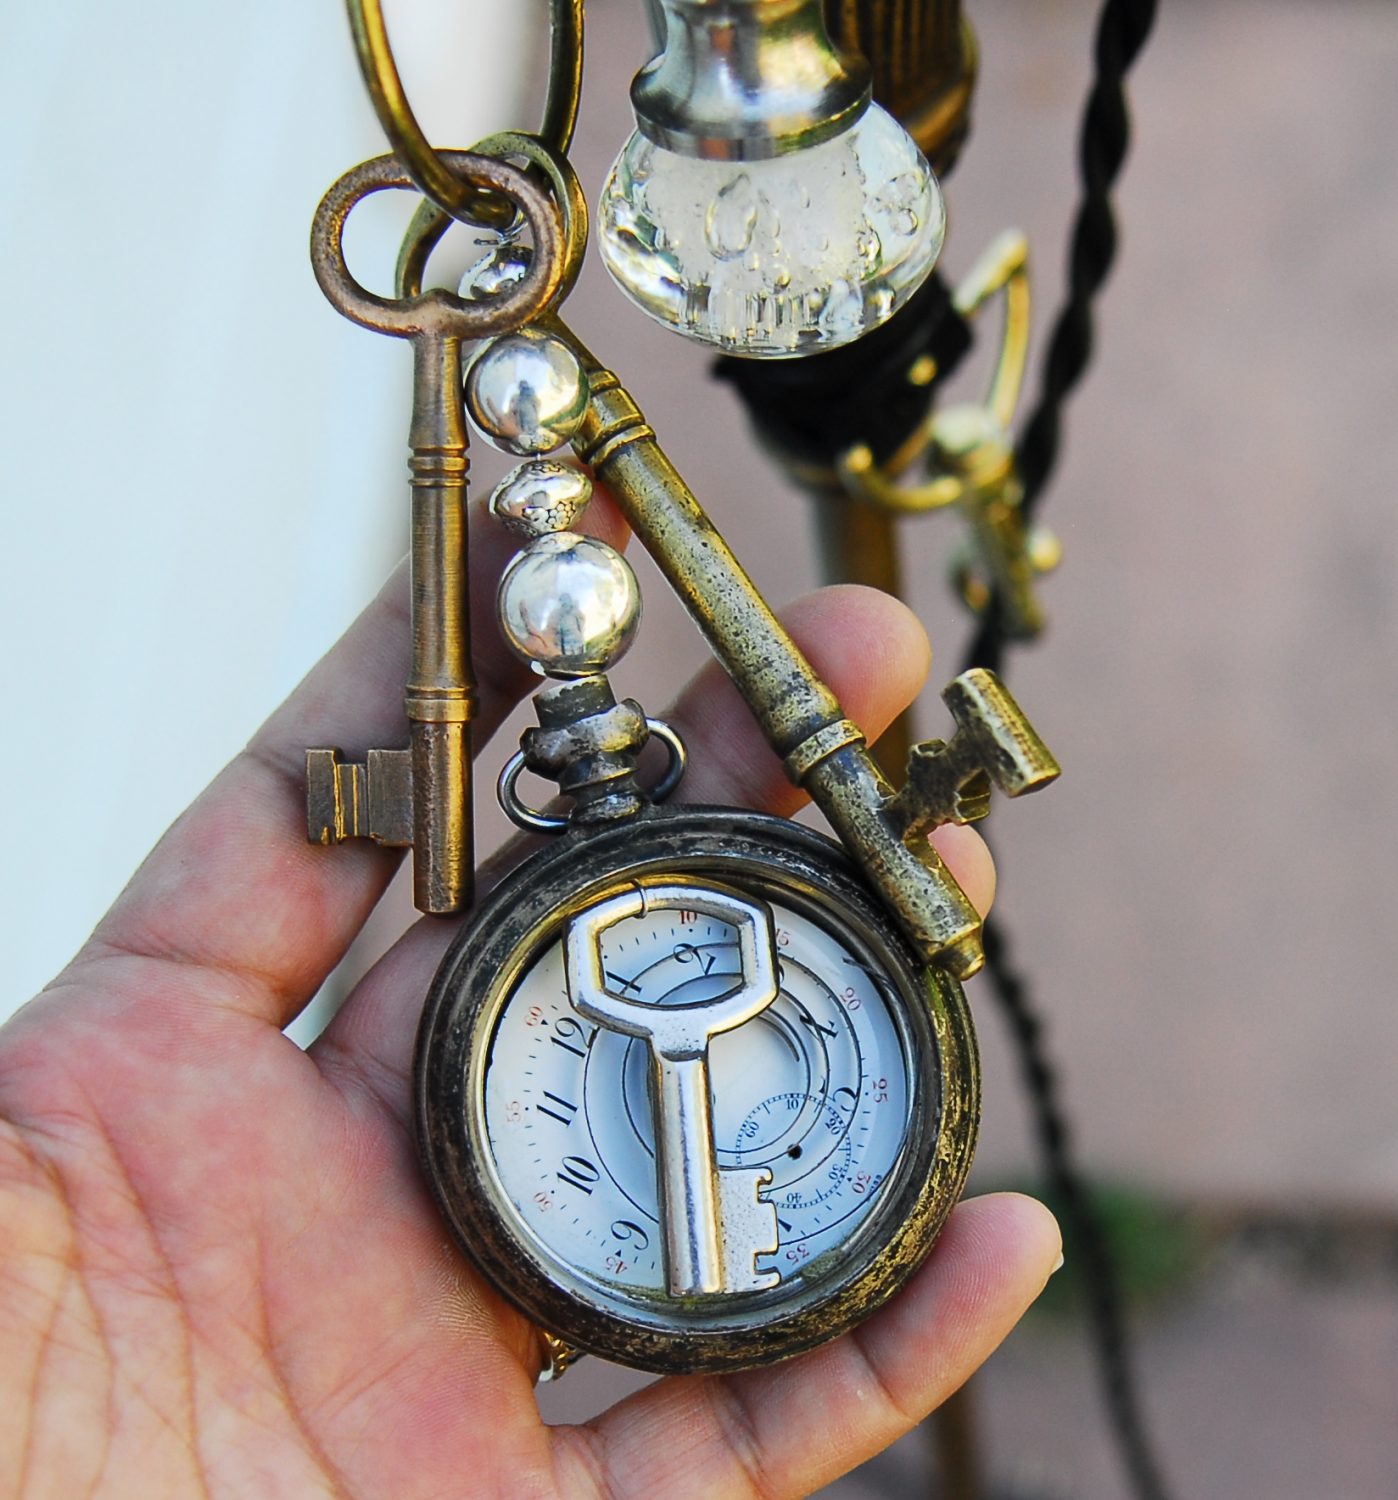 Trumpet Lamp, Time for Change, detail clock & keys, 2016